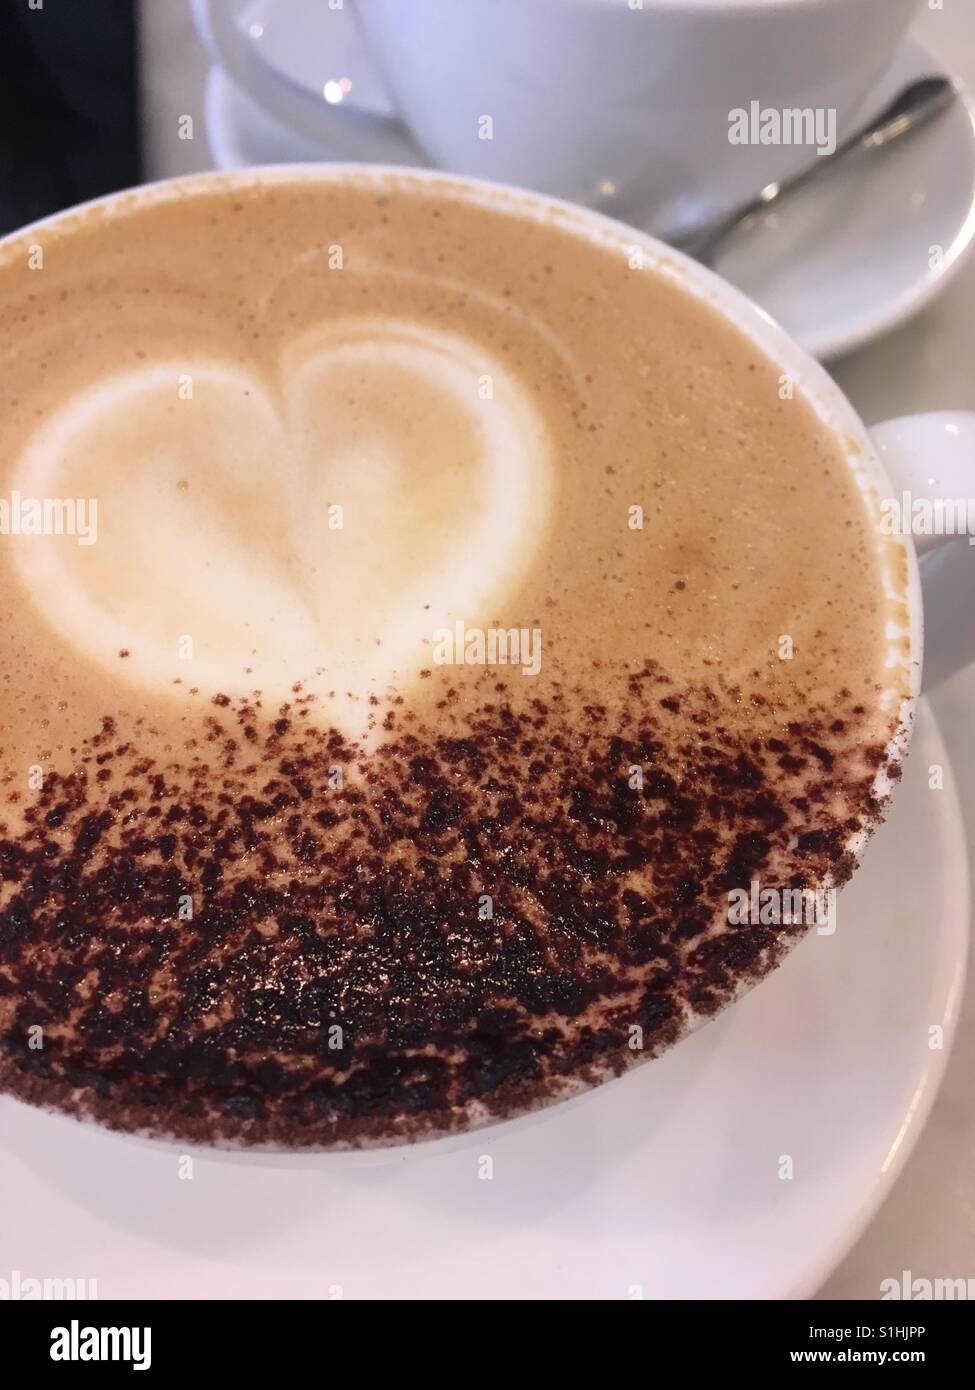 Latte art on a cappuccino Stock Photo